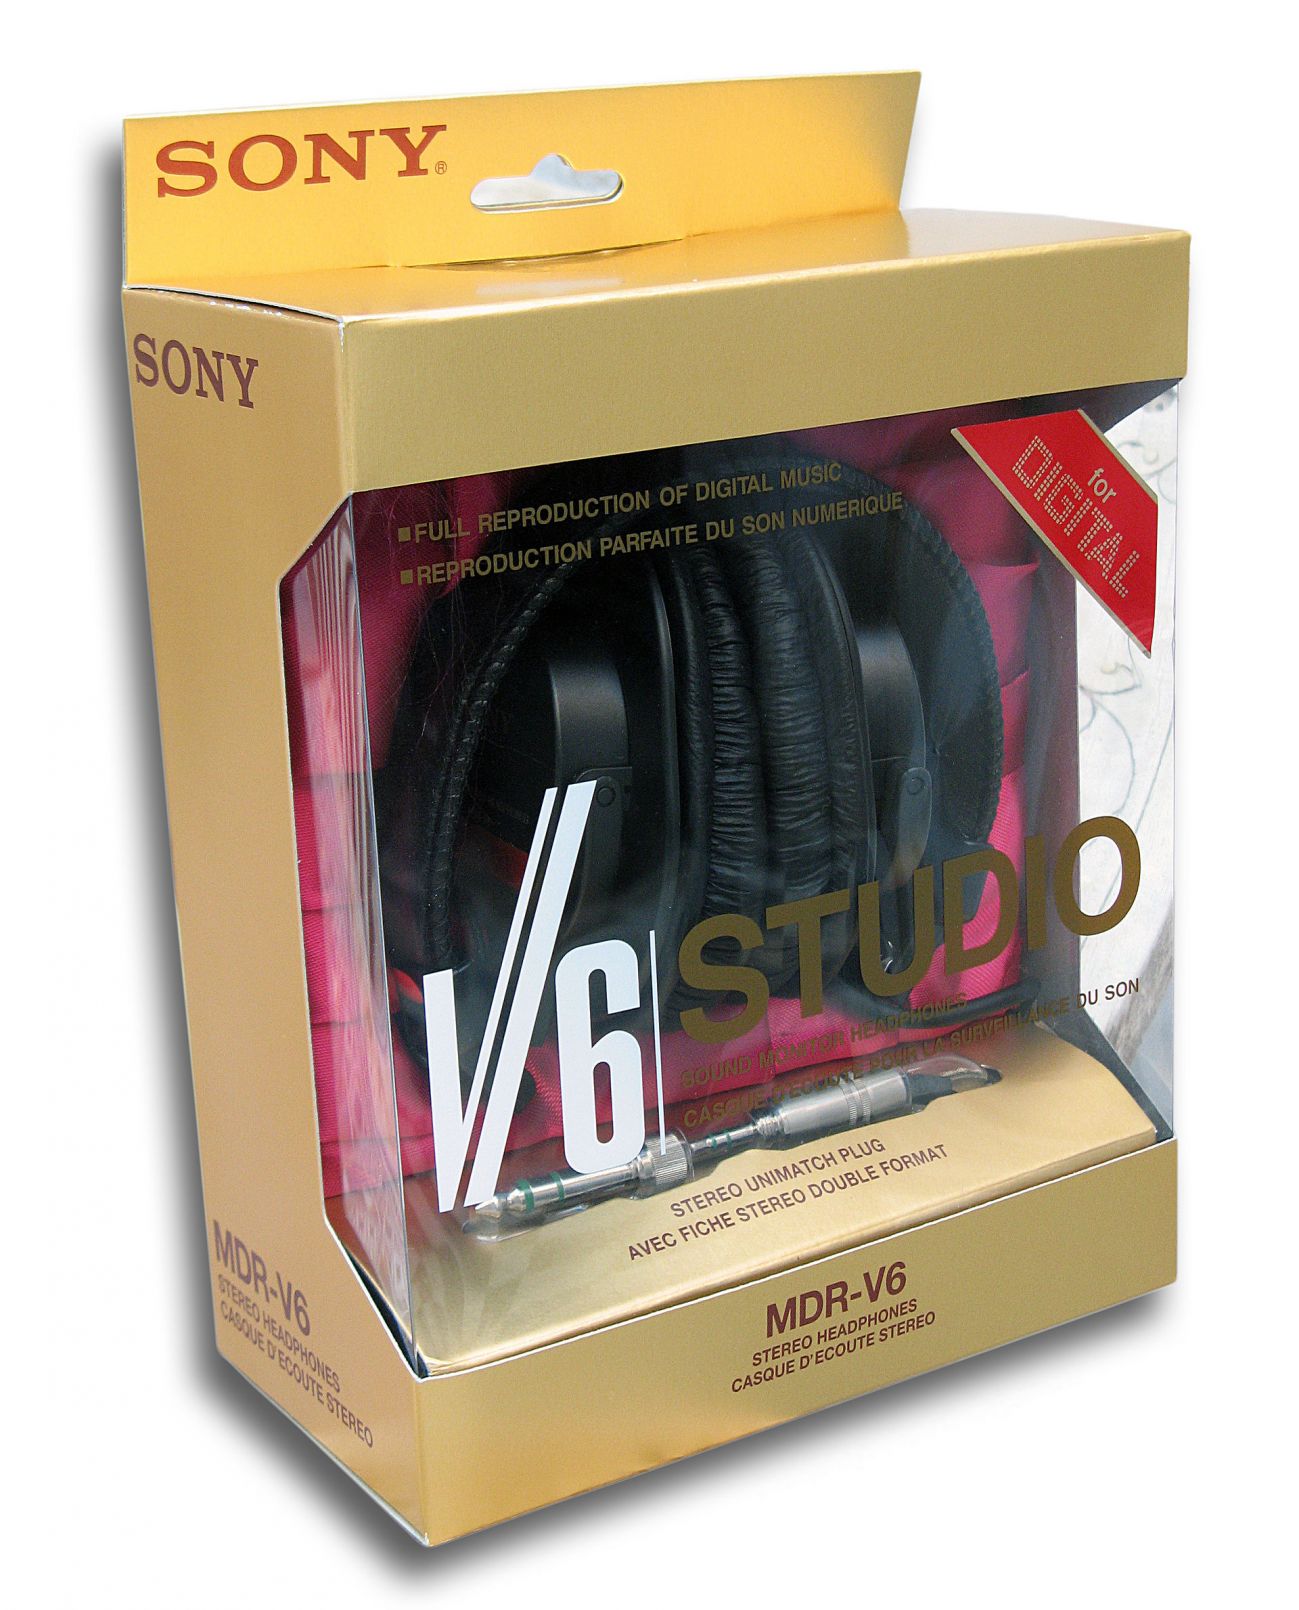 1920px-Sony_MDR-V6_Headphones_boxed.jpg